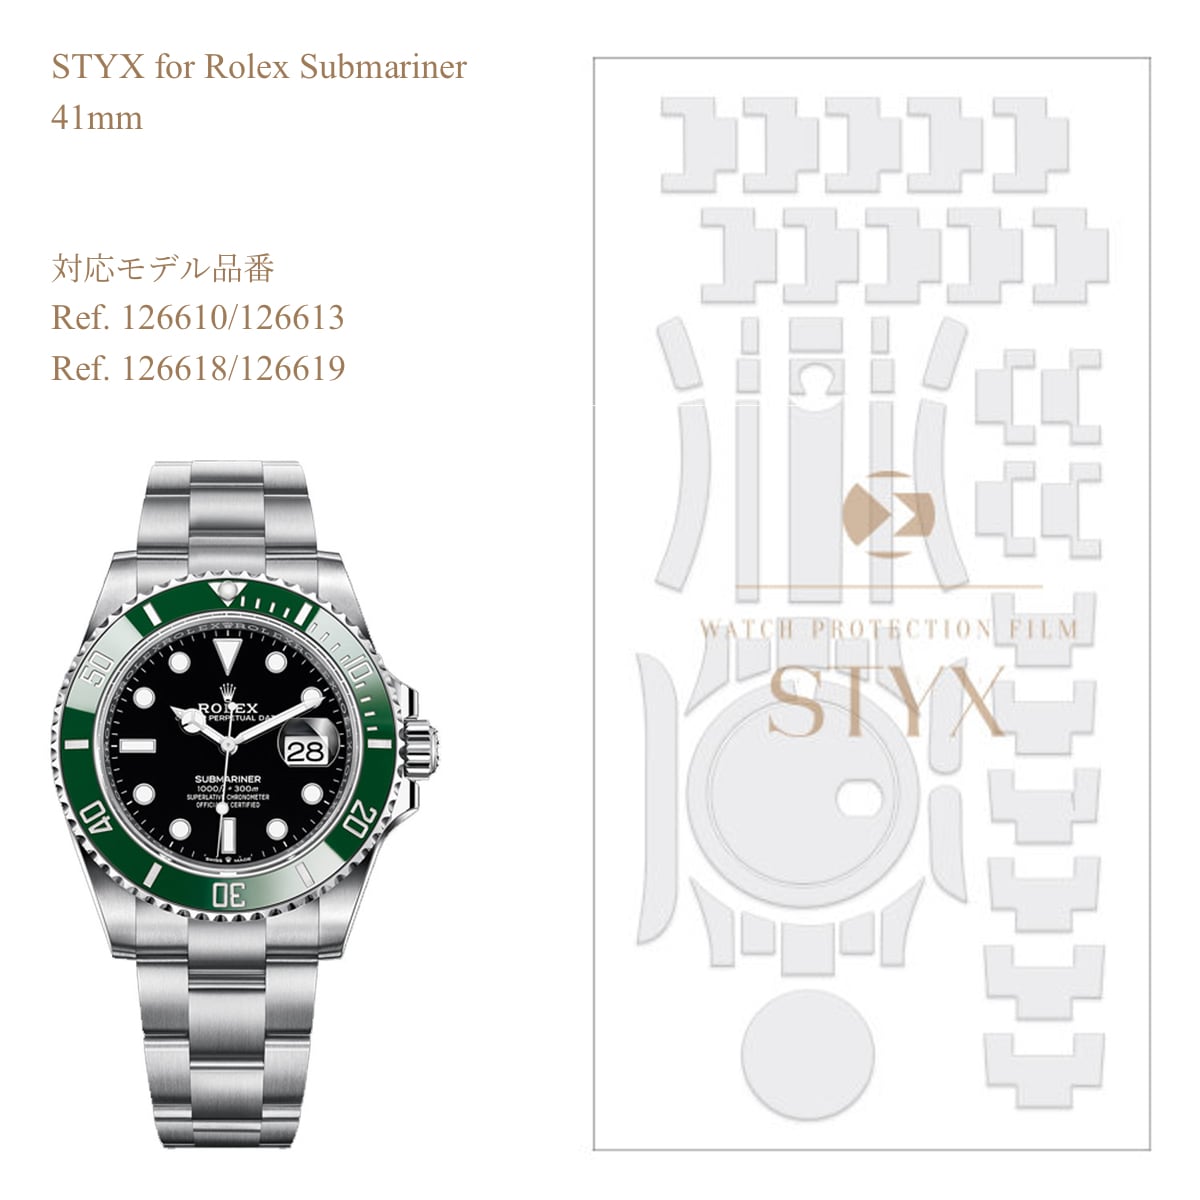 【STYX】スティックス保護フィルム for Submariner 41mm (Date)